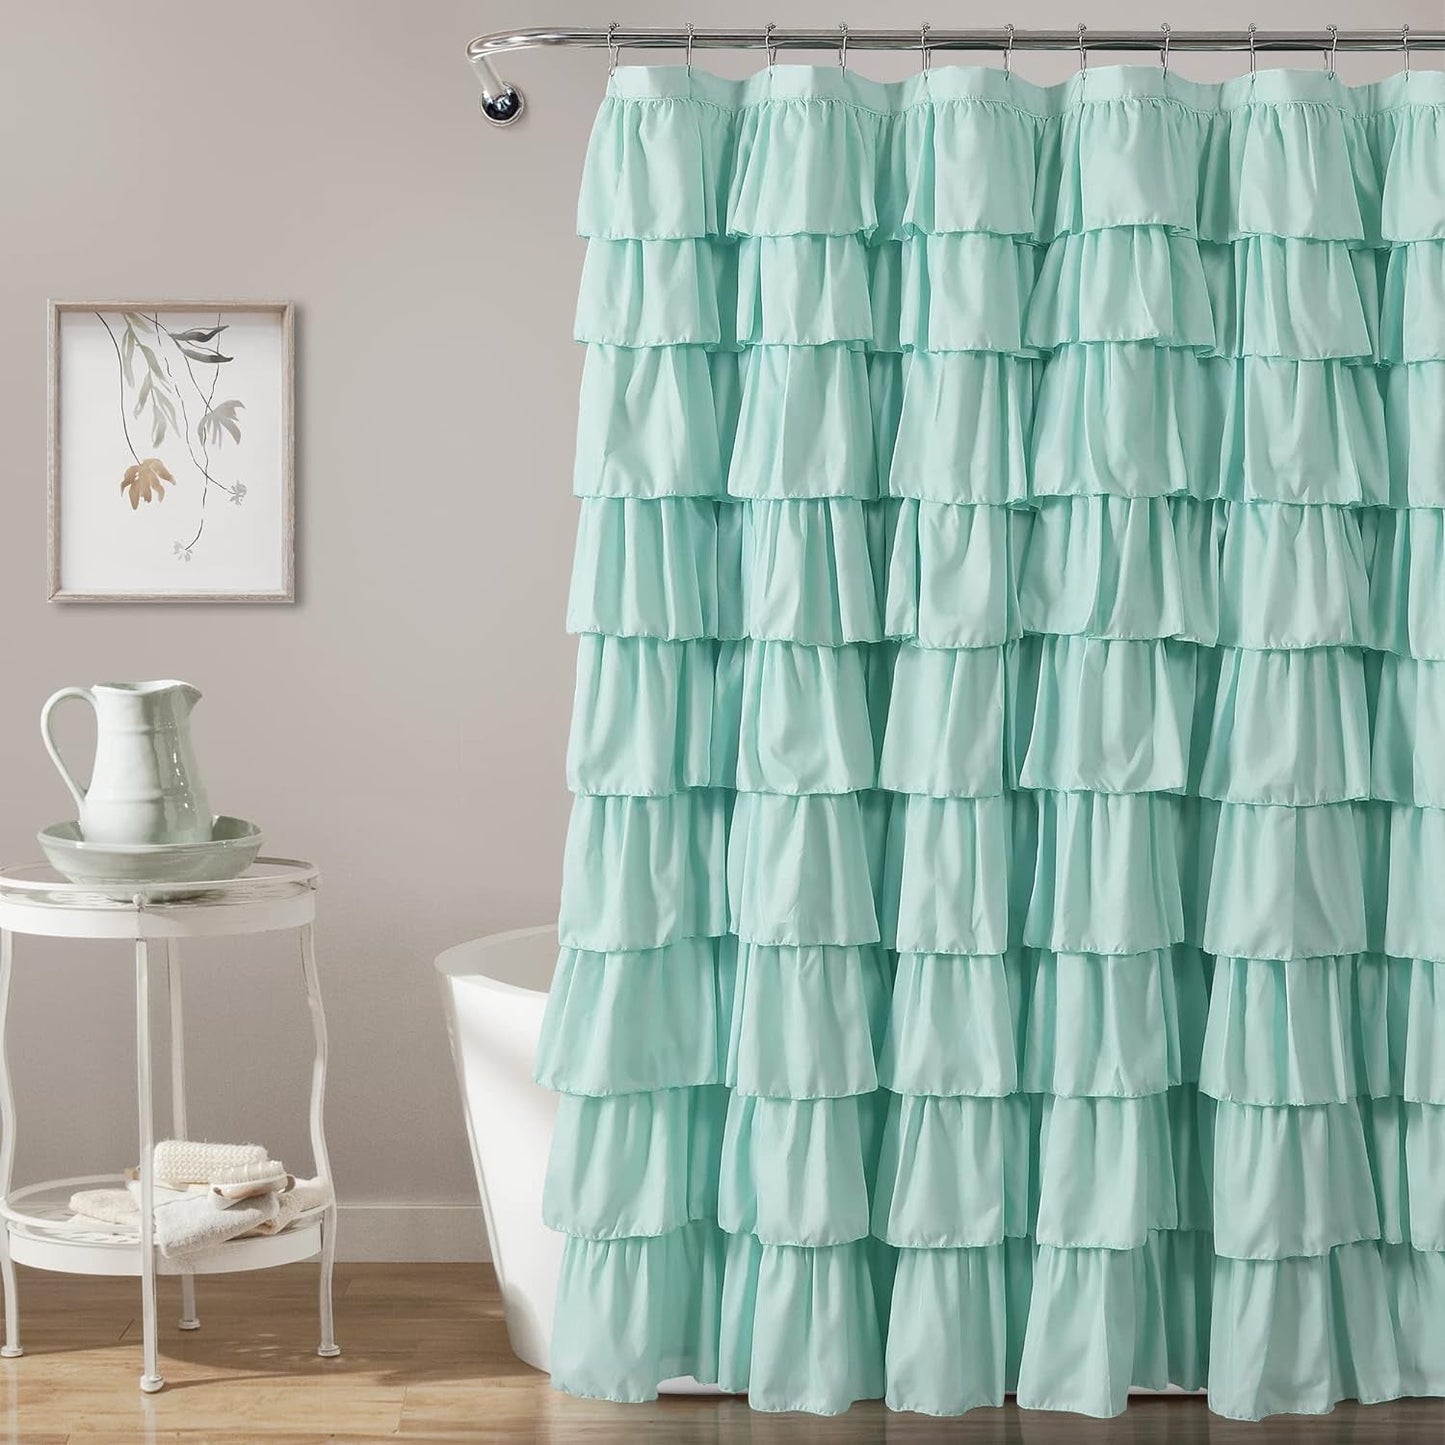 Lush Decor Ruffle Shower Curtain | Floral Textured Vintage Chic Farmhouse Style Design, Ivory, 72" X 72"